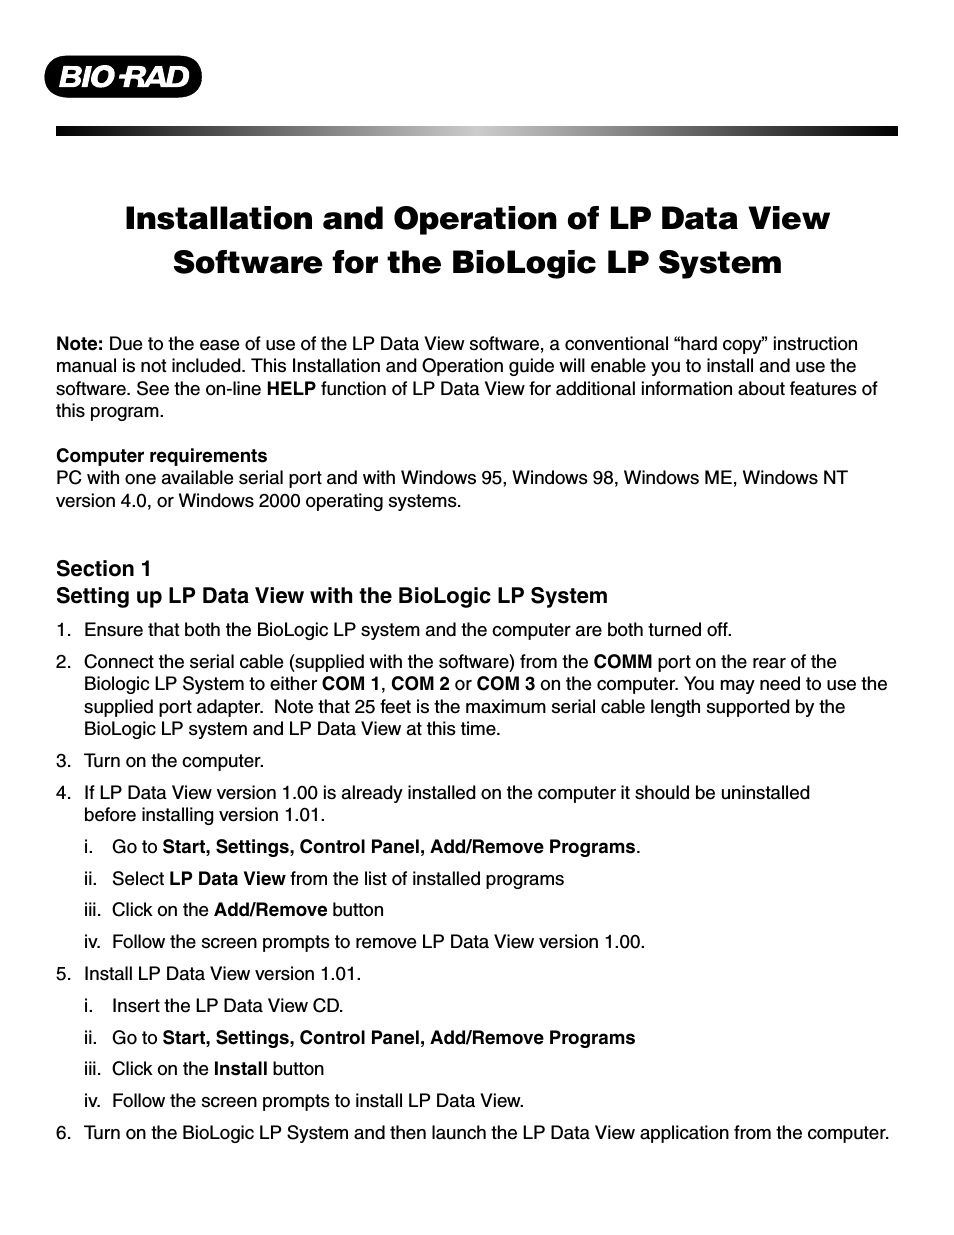 LP Data View Software for BioLogic LP System